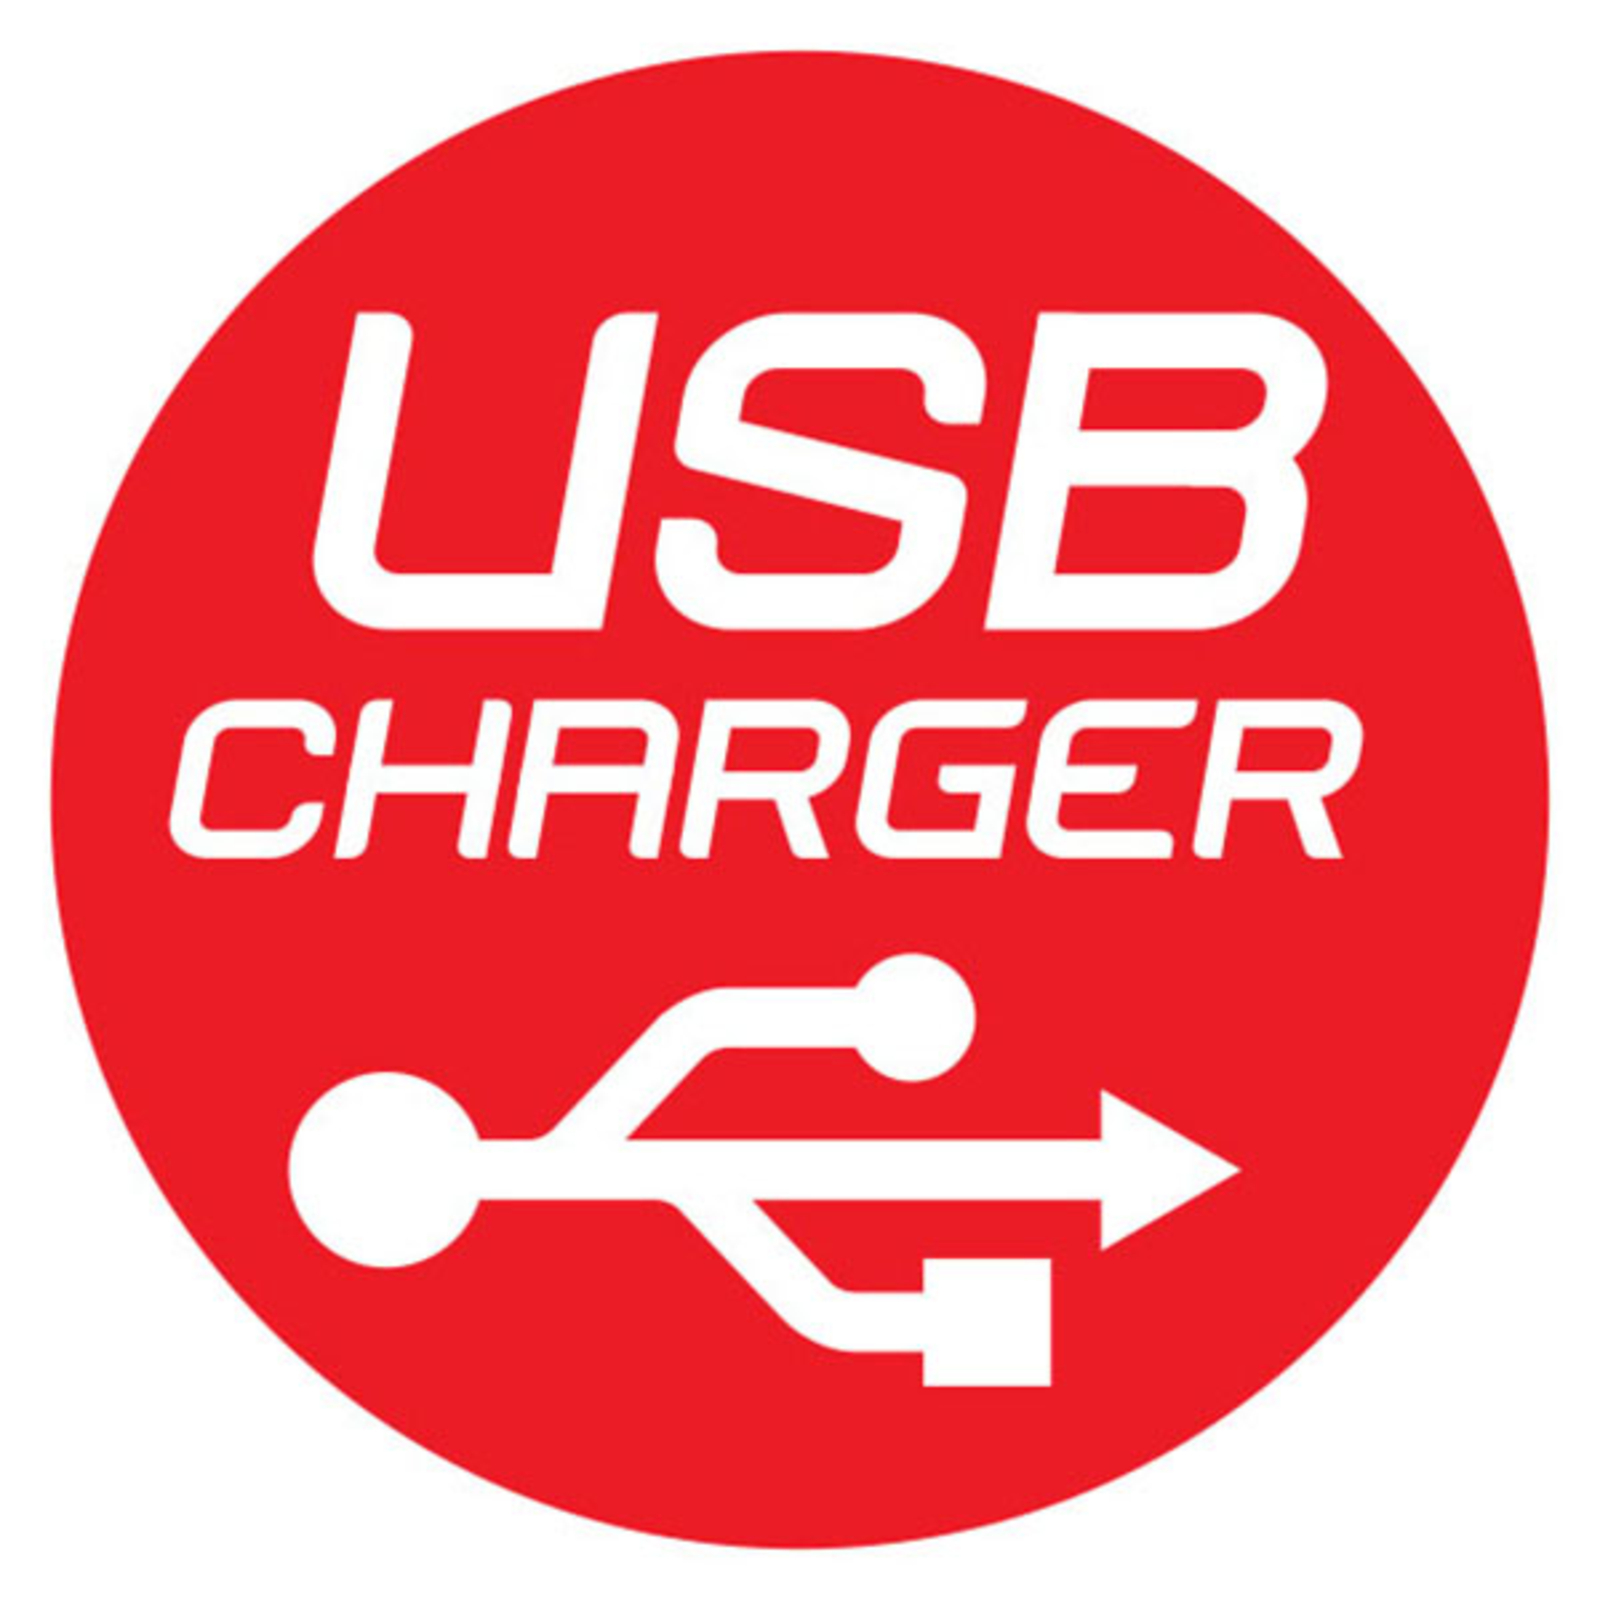 Steckdosenblock ALEA-Power mit USB-Charger